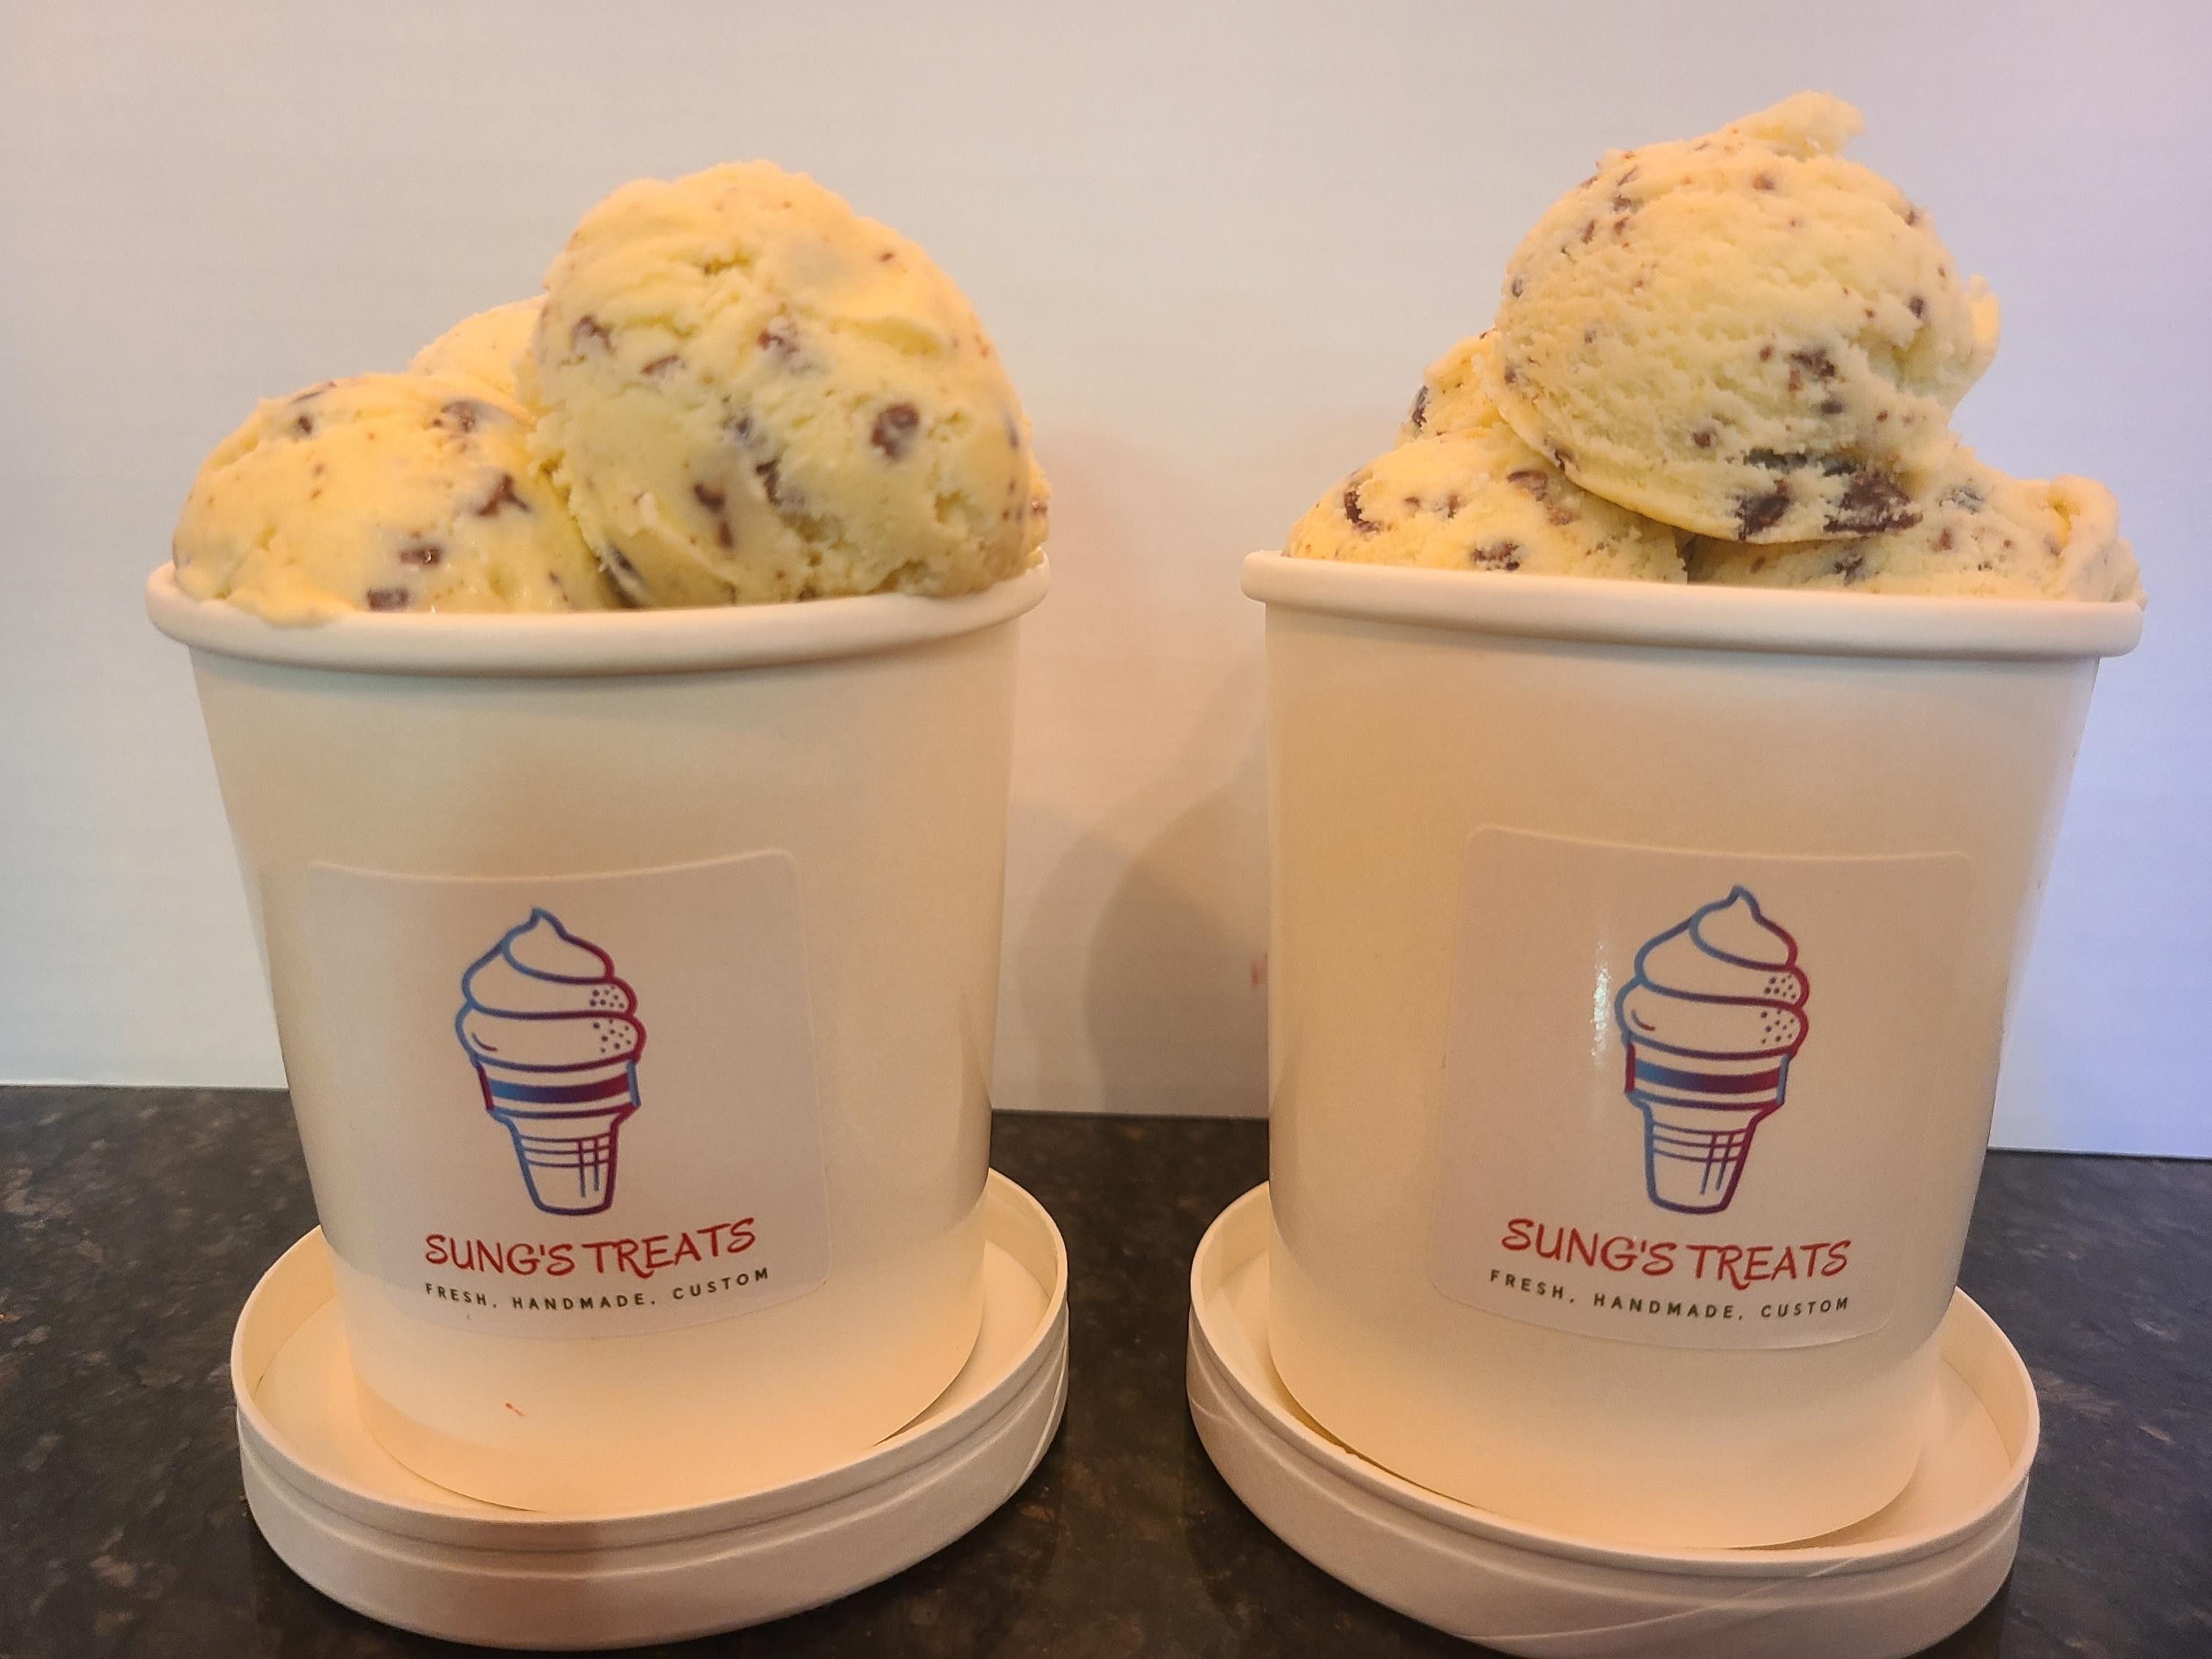 Sung's Treats Ube Ice Cream